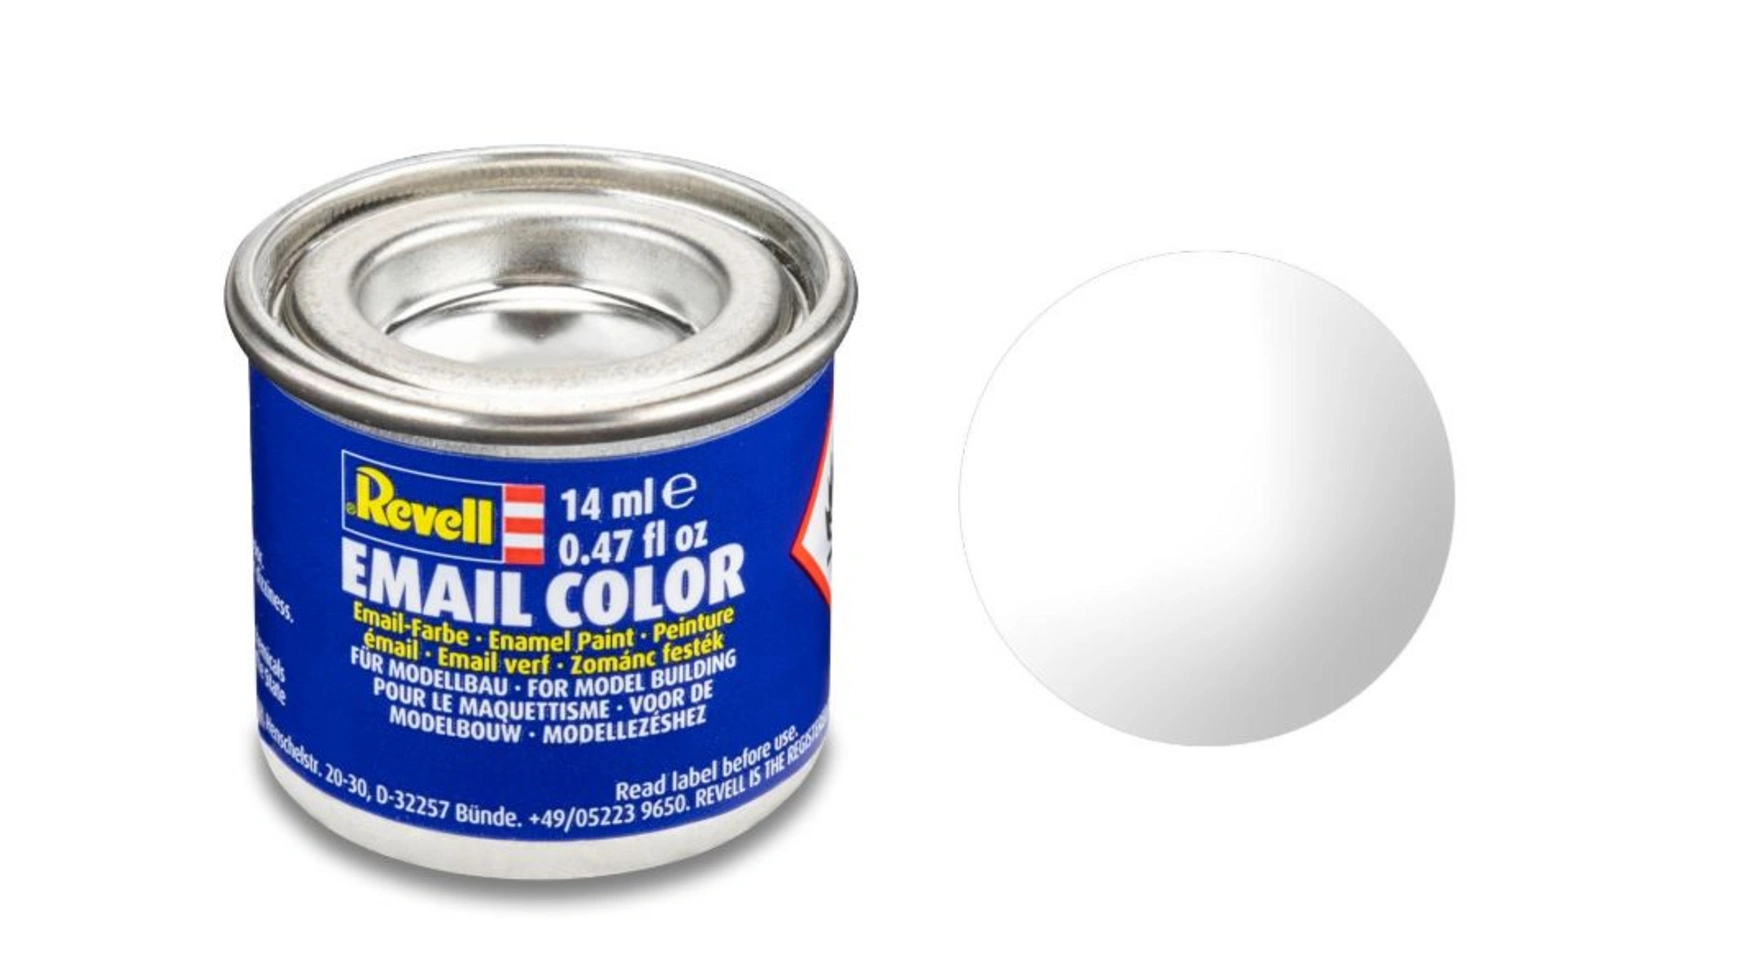 Revell Email Color Бесцветный, блестящий, 14мл